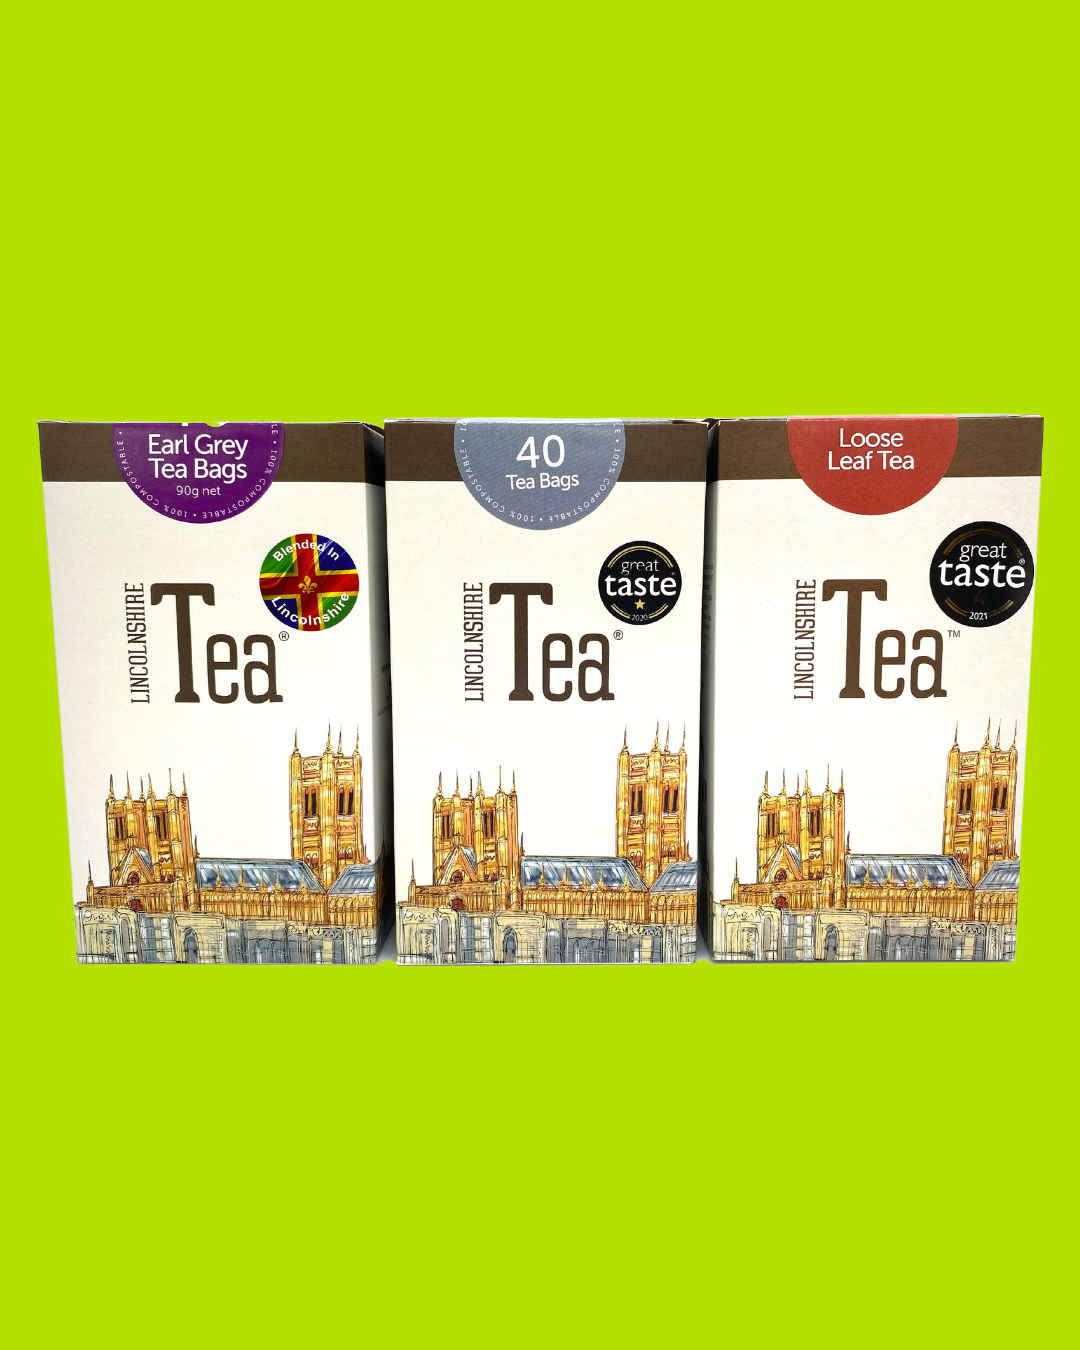 Three boxes of tea: One earl grey tea, one regular tea, and one loose leaf tea